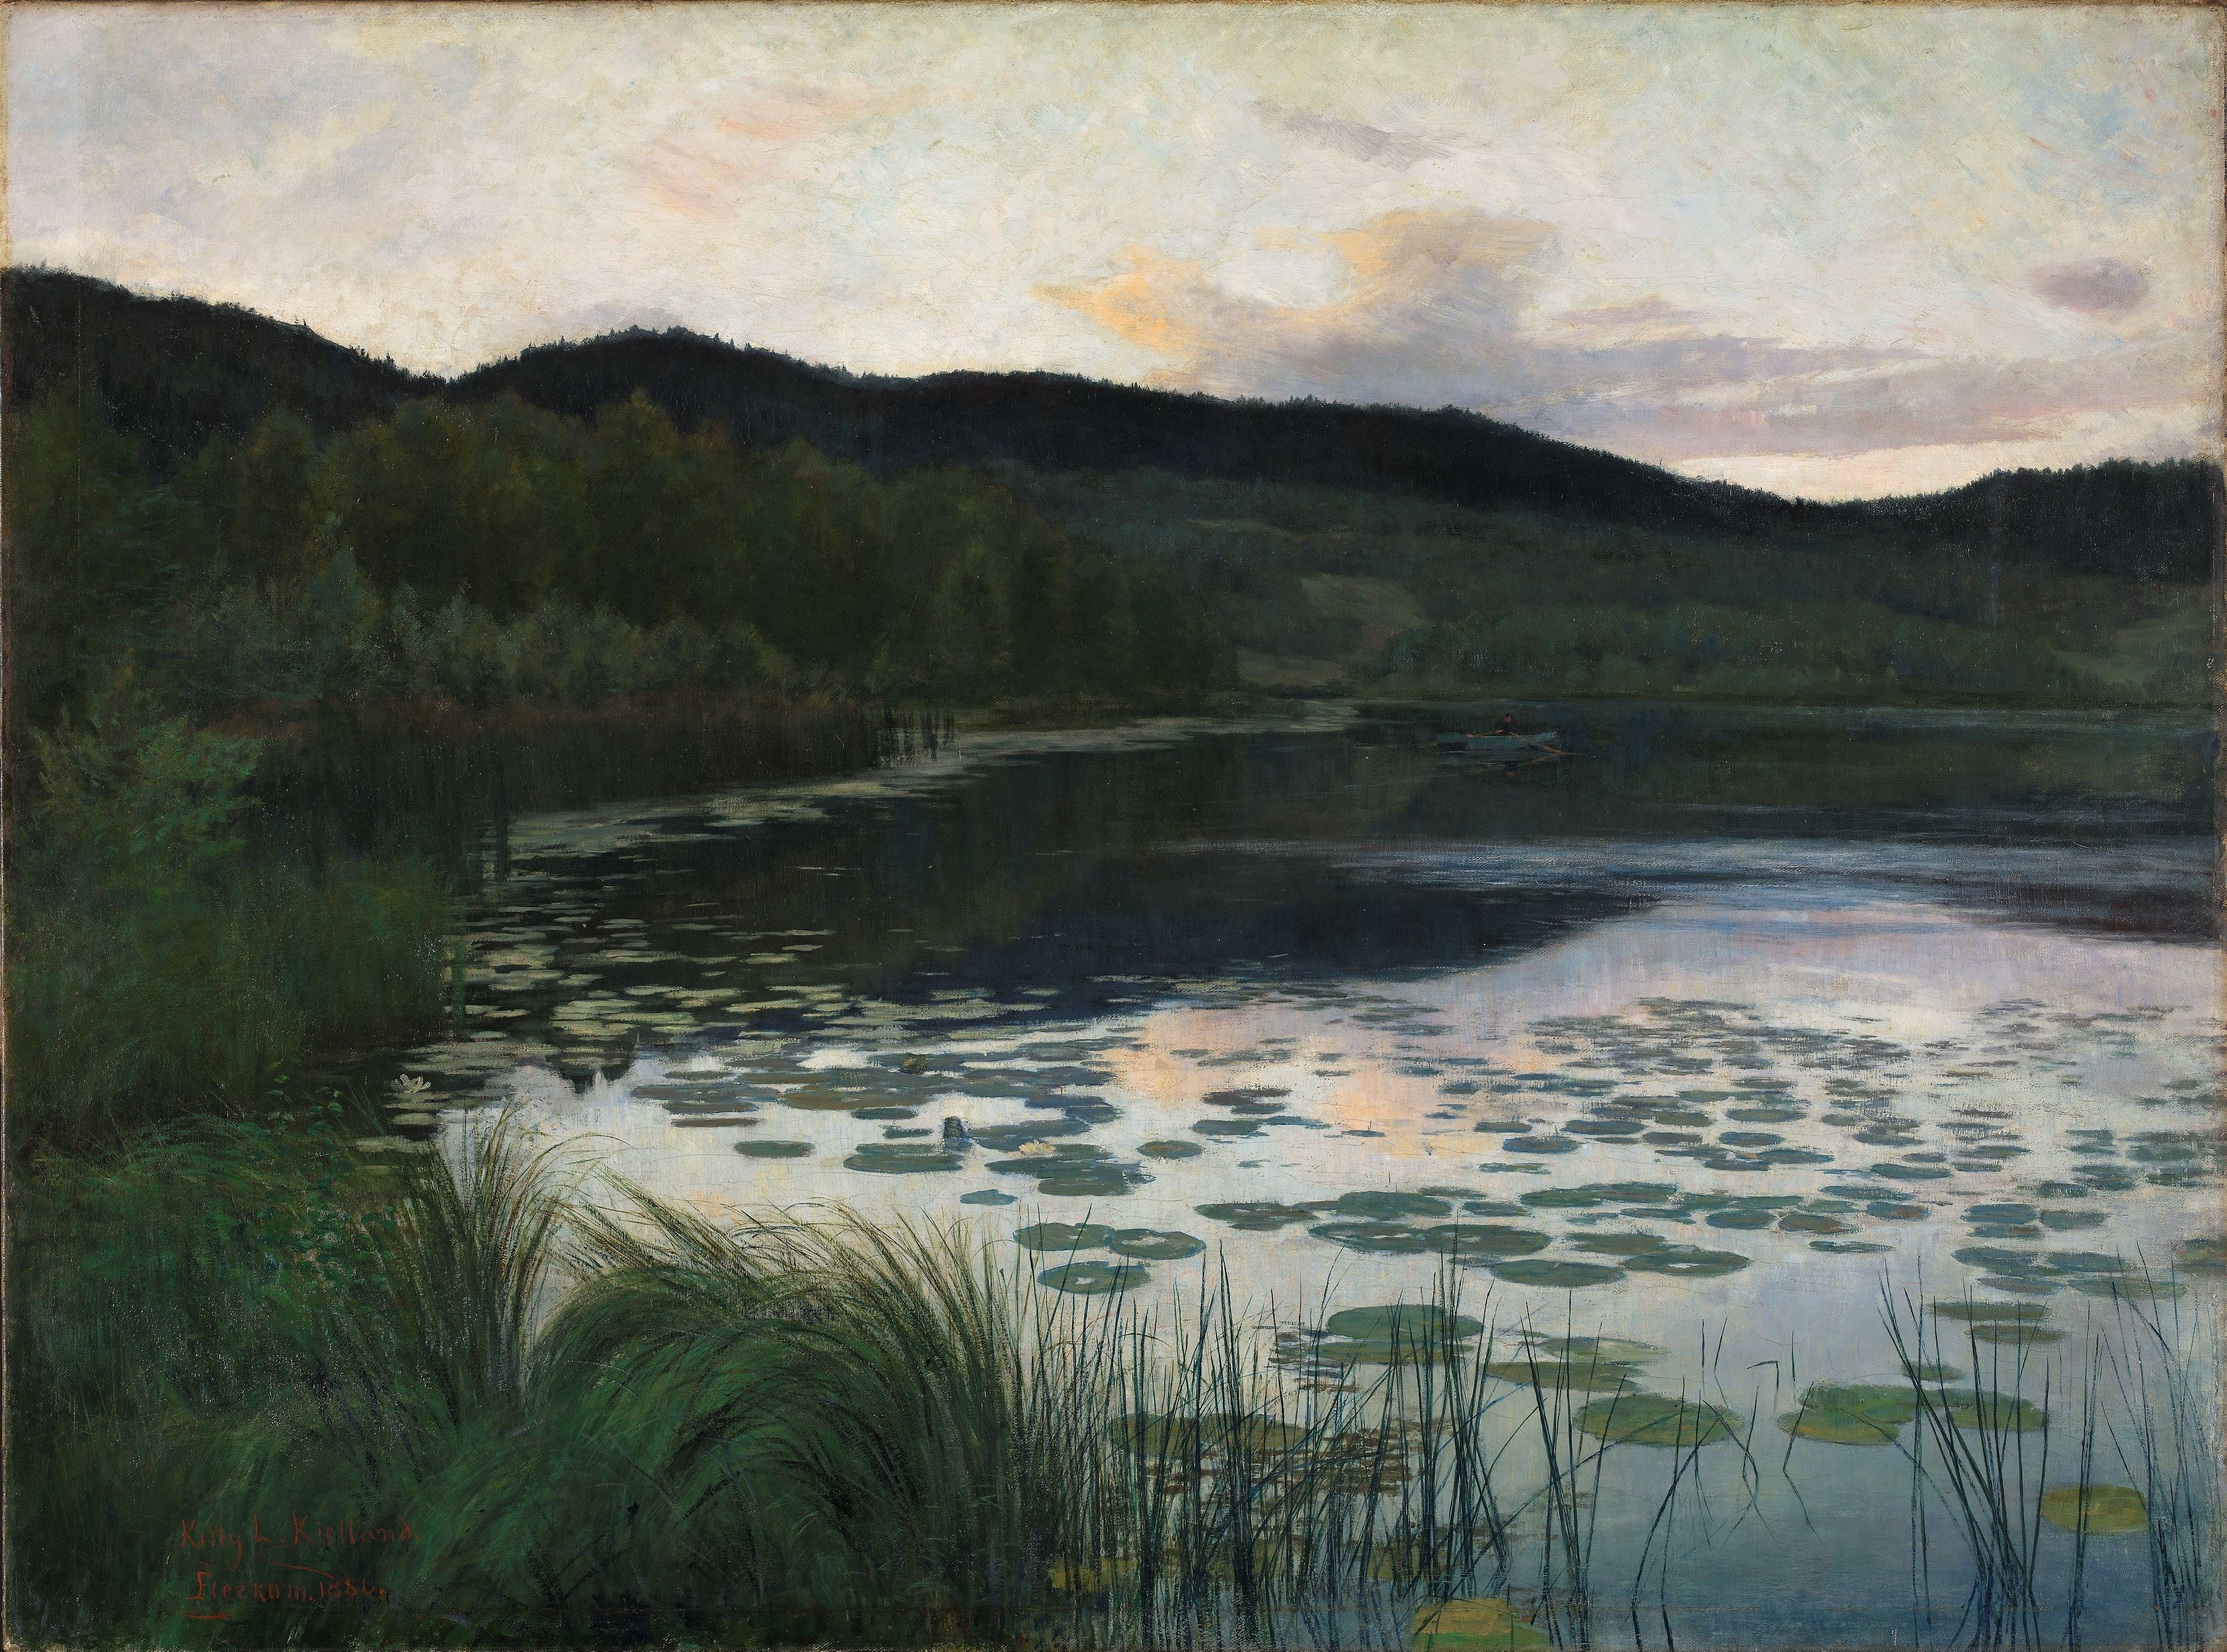 Noche de verano by Kitty Kielland - 1886 - 135,5 x 100,5 cm Nasjonalmuseet